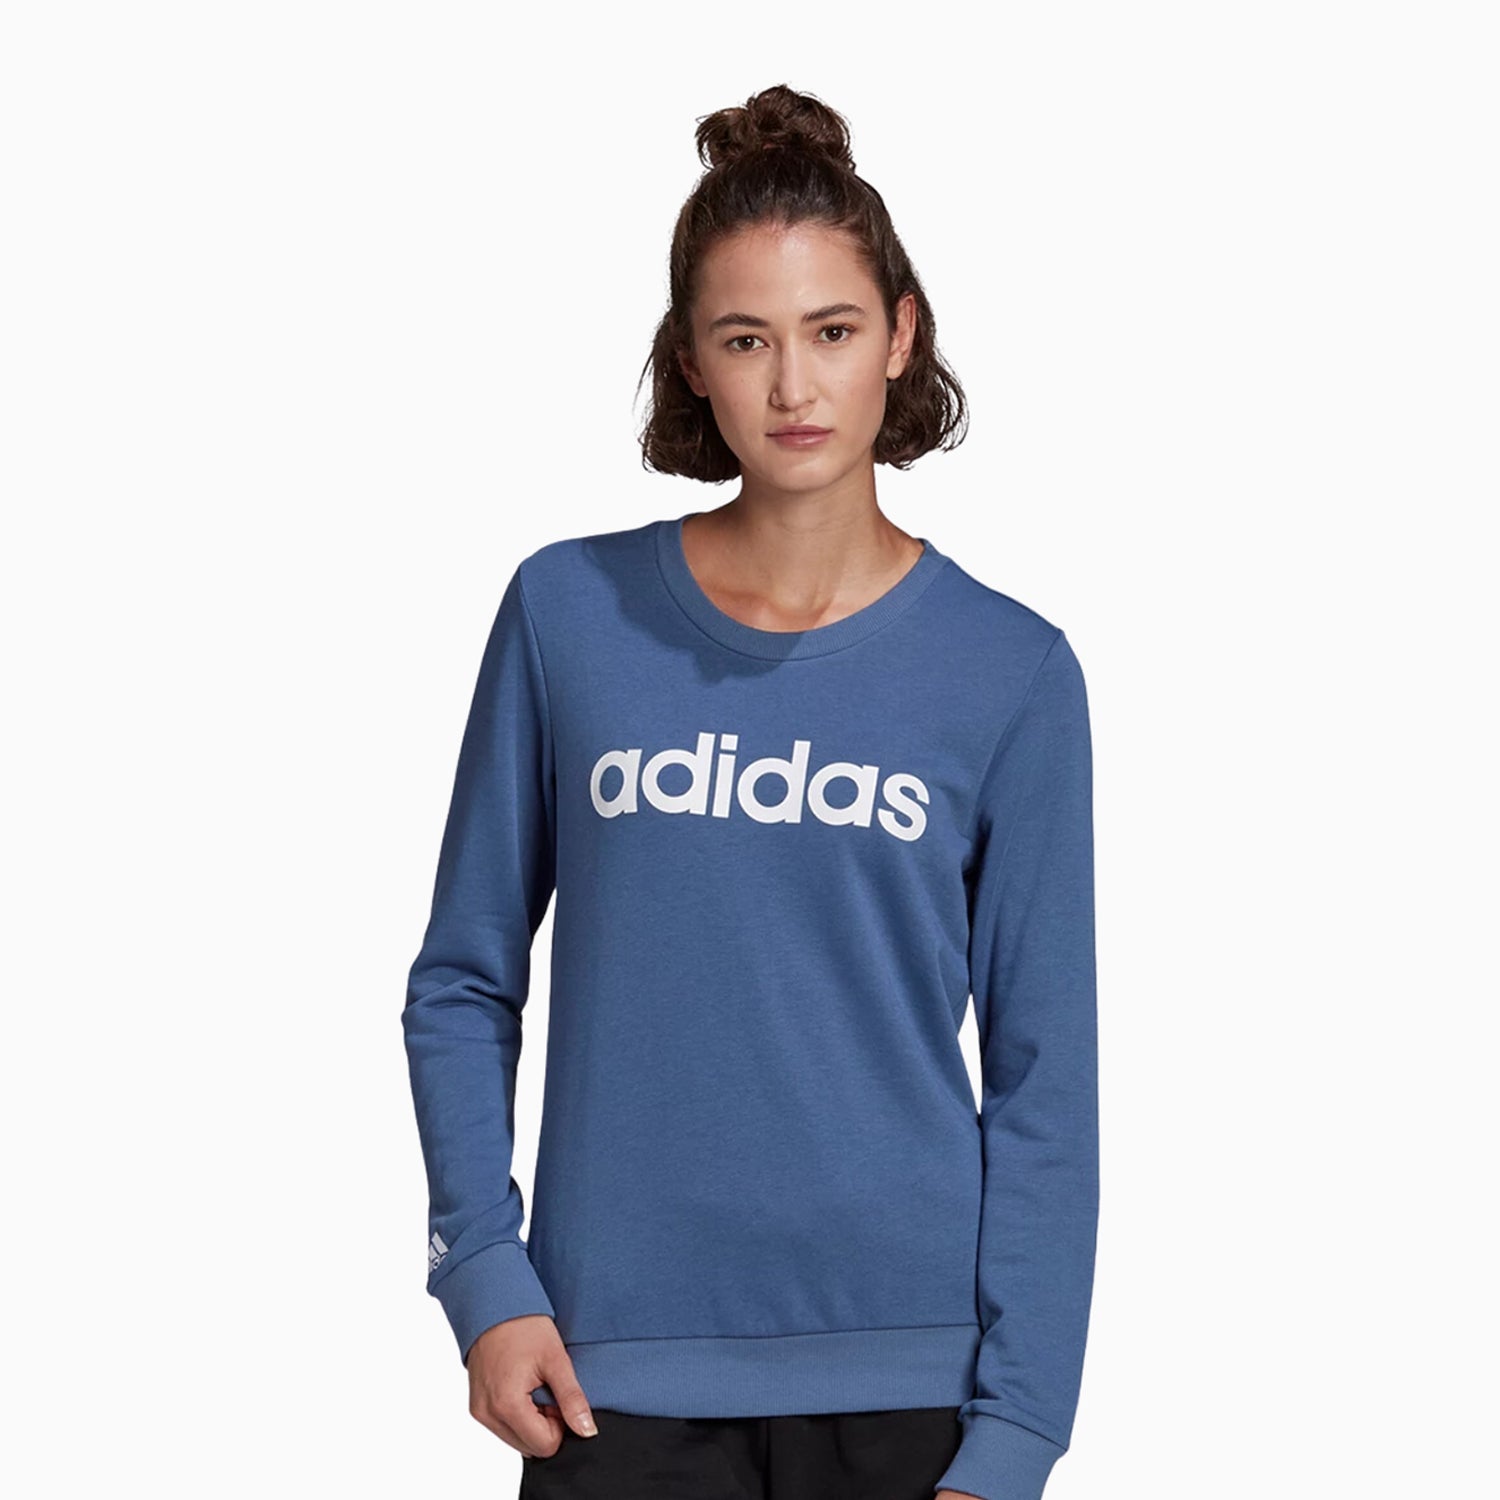 adidas-womens-essentials-logo-crew-neck-sweatshirt-gl0720